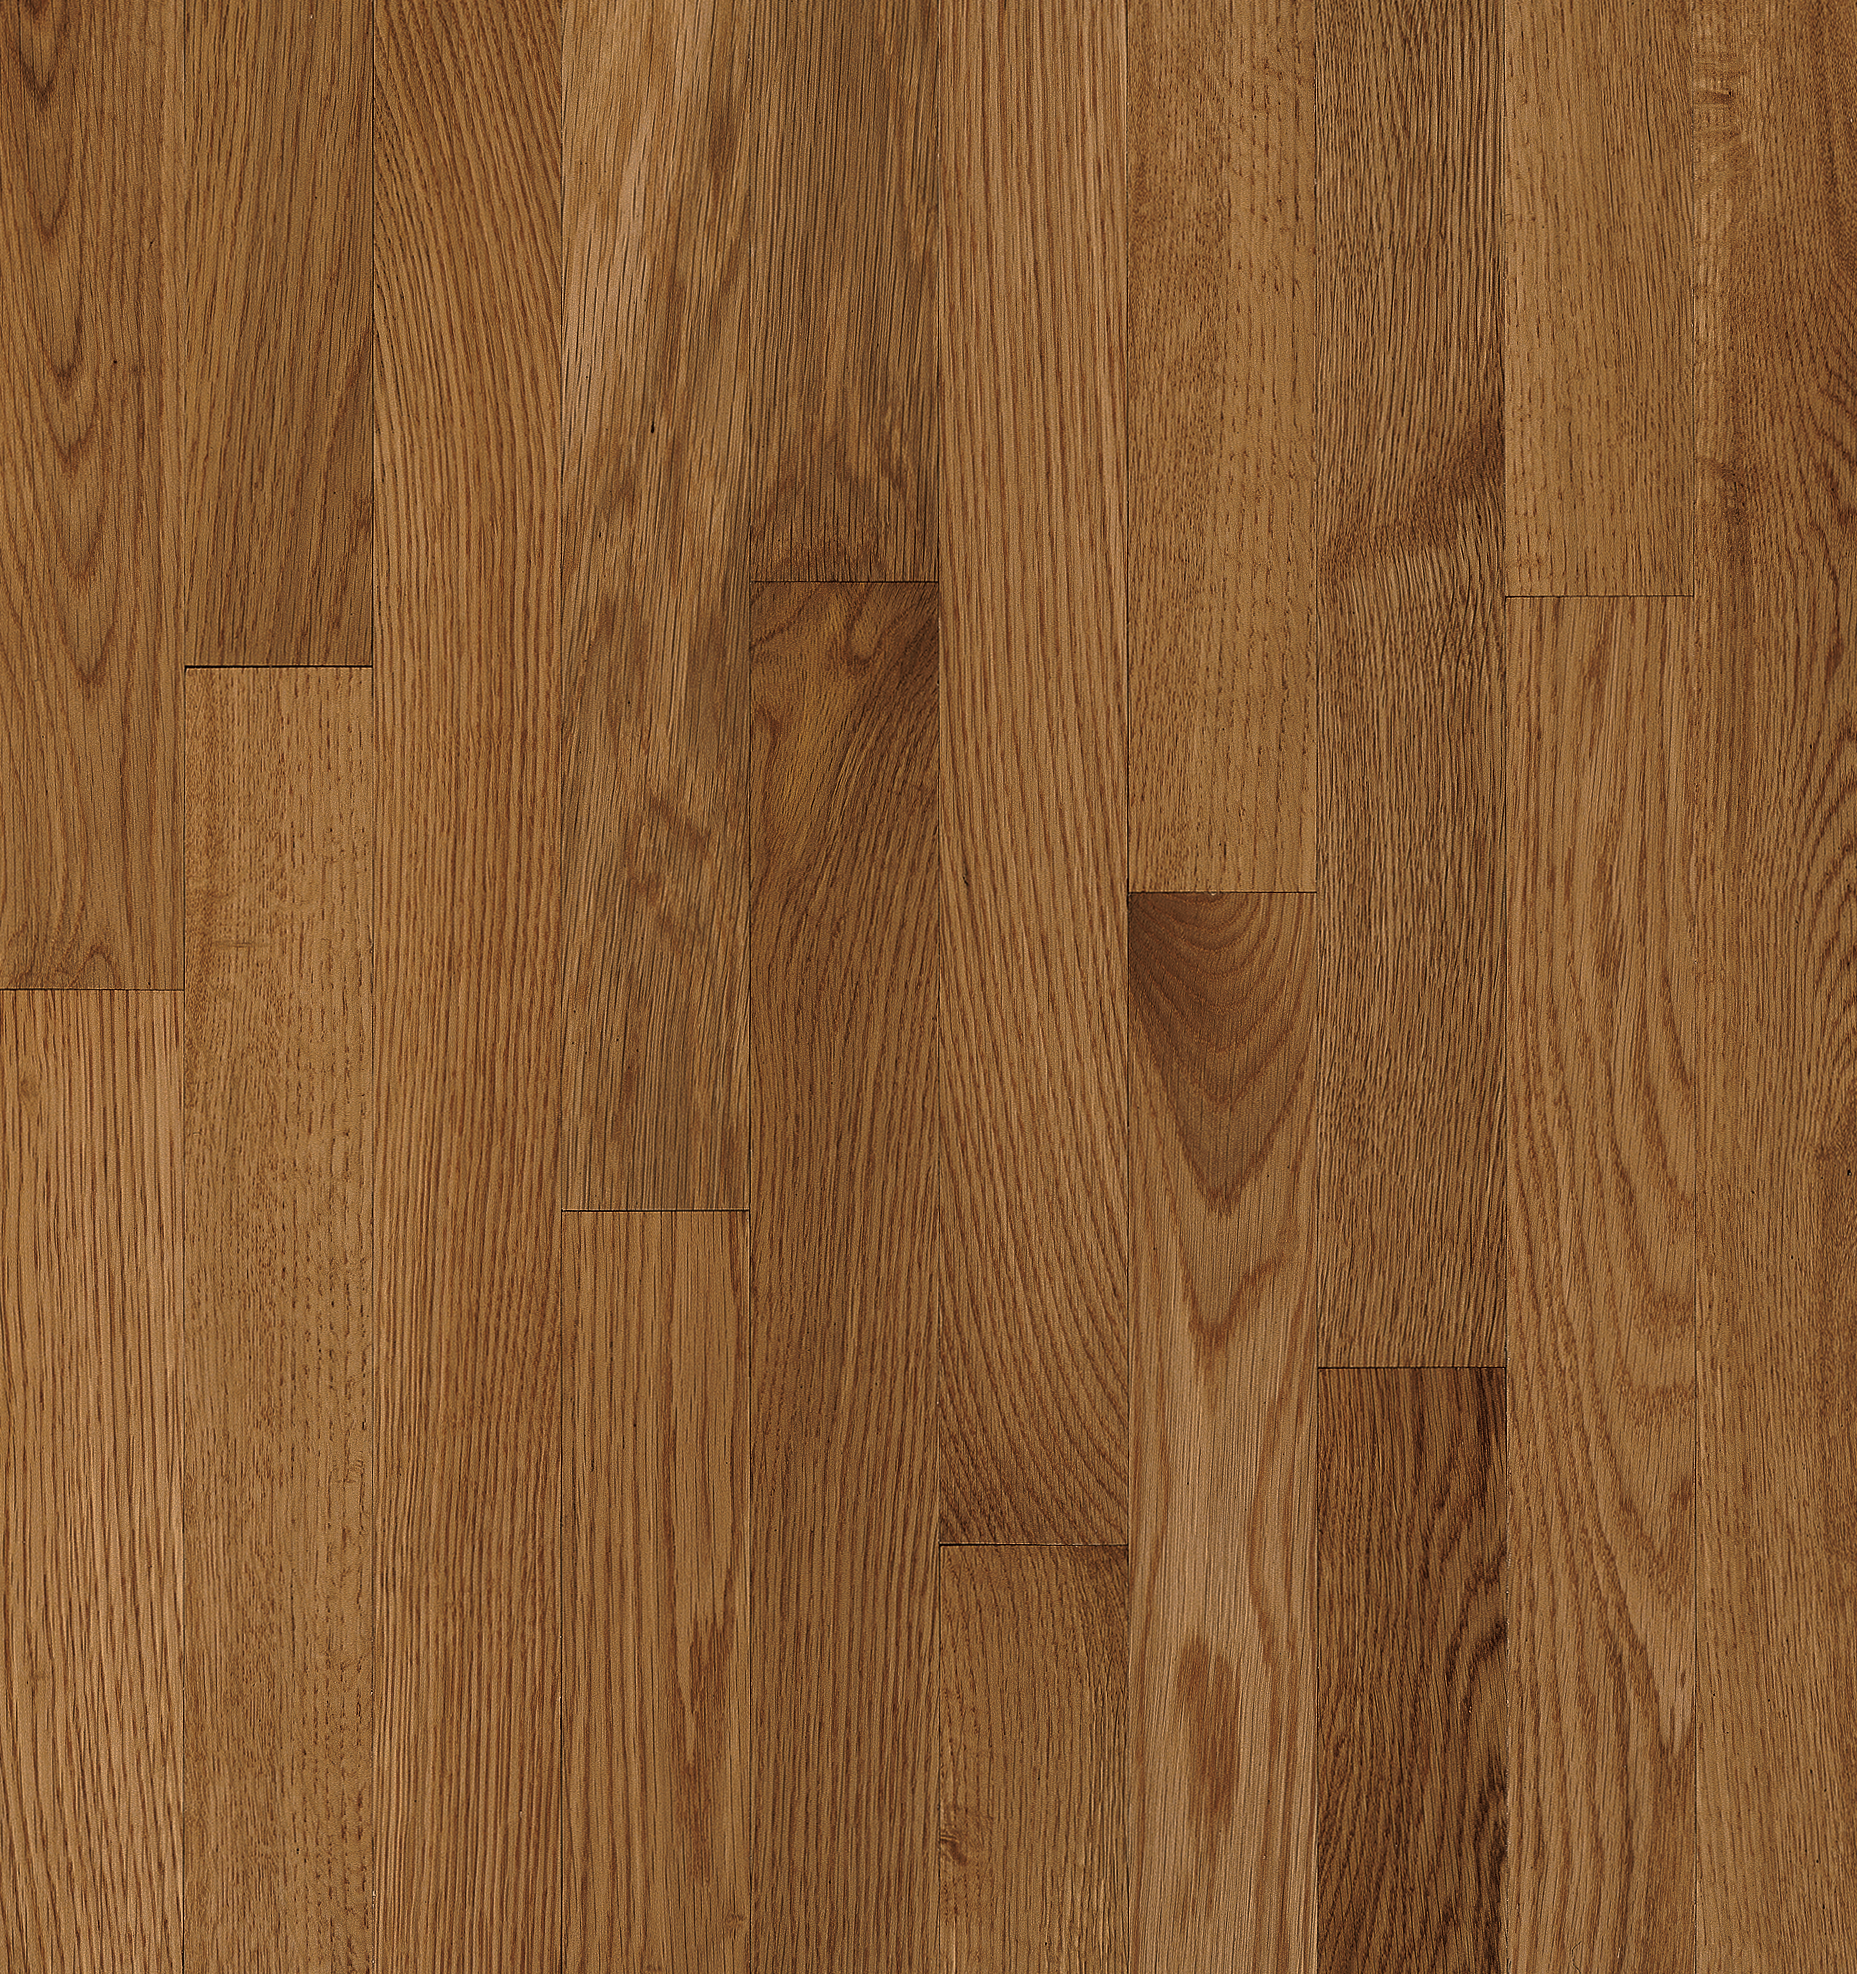 Oak Solid Hardwood C5014, Bruce Hardwood Flooring Samples